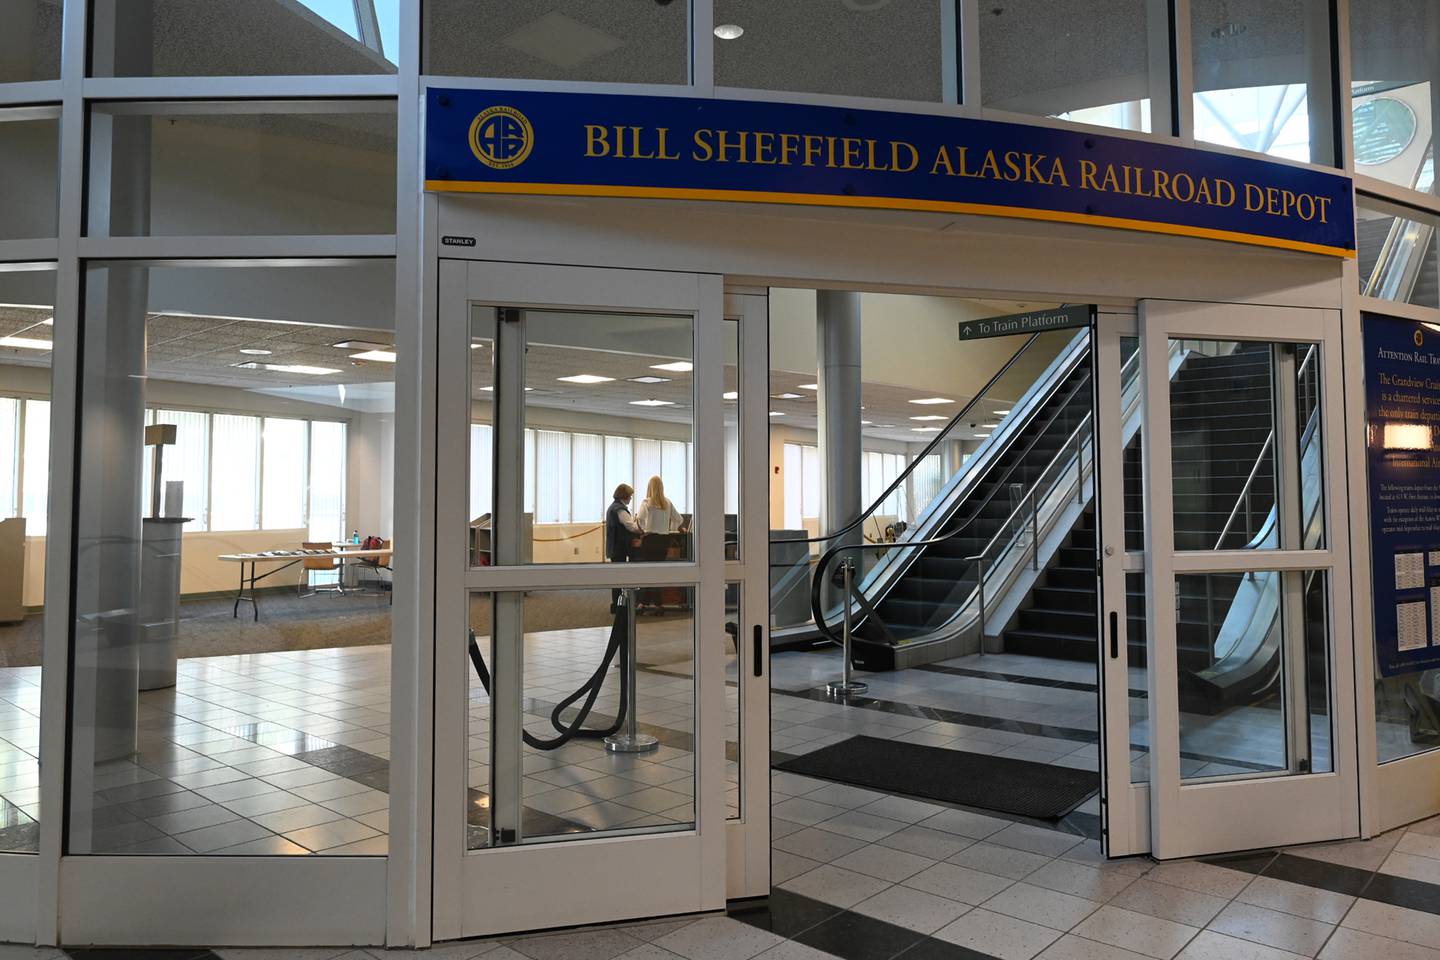 Bill Sheffield Alaska Railroad Depot at Ted Stevens Anchorage International Airport 